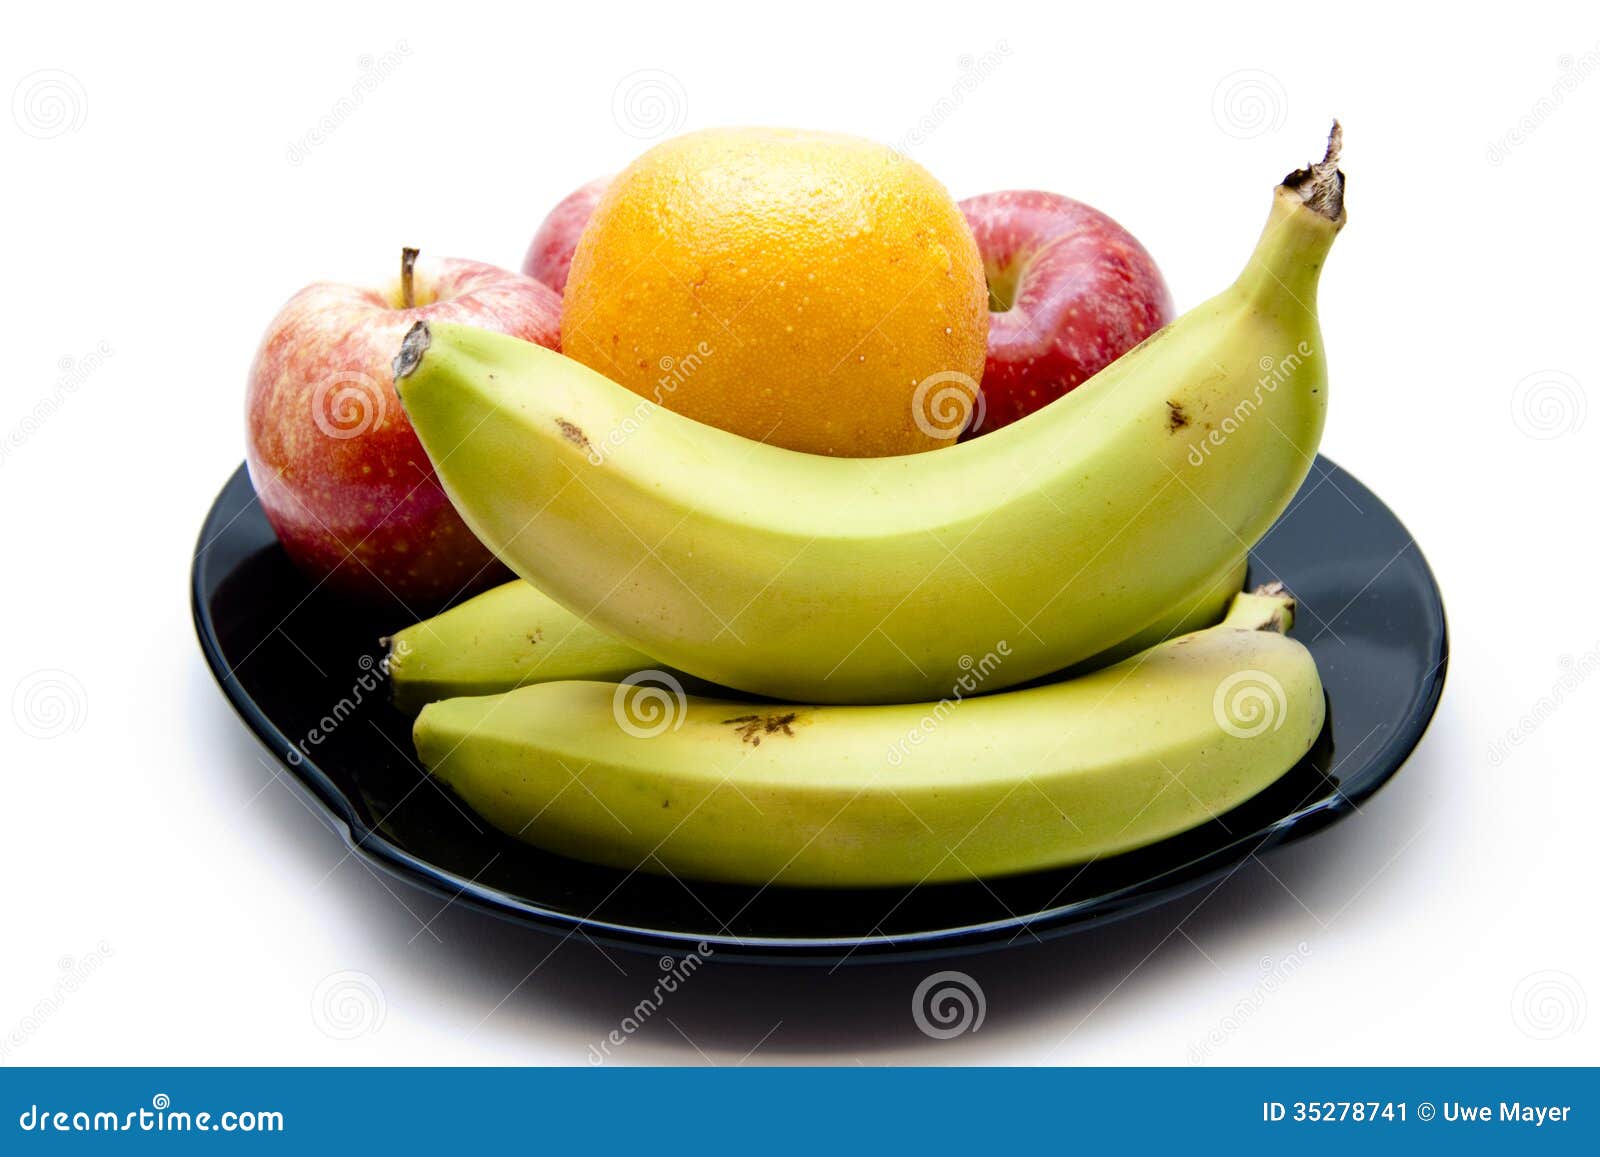 Bananas And Apples And Orange Stock Image Image Of Black Banana